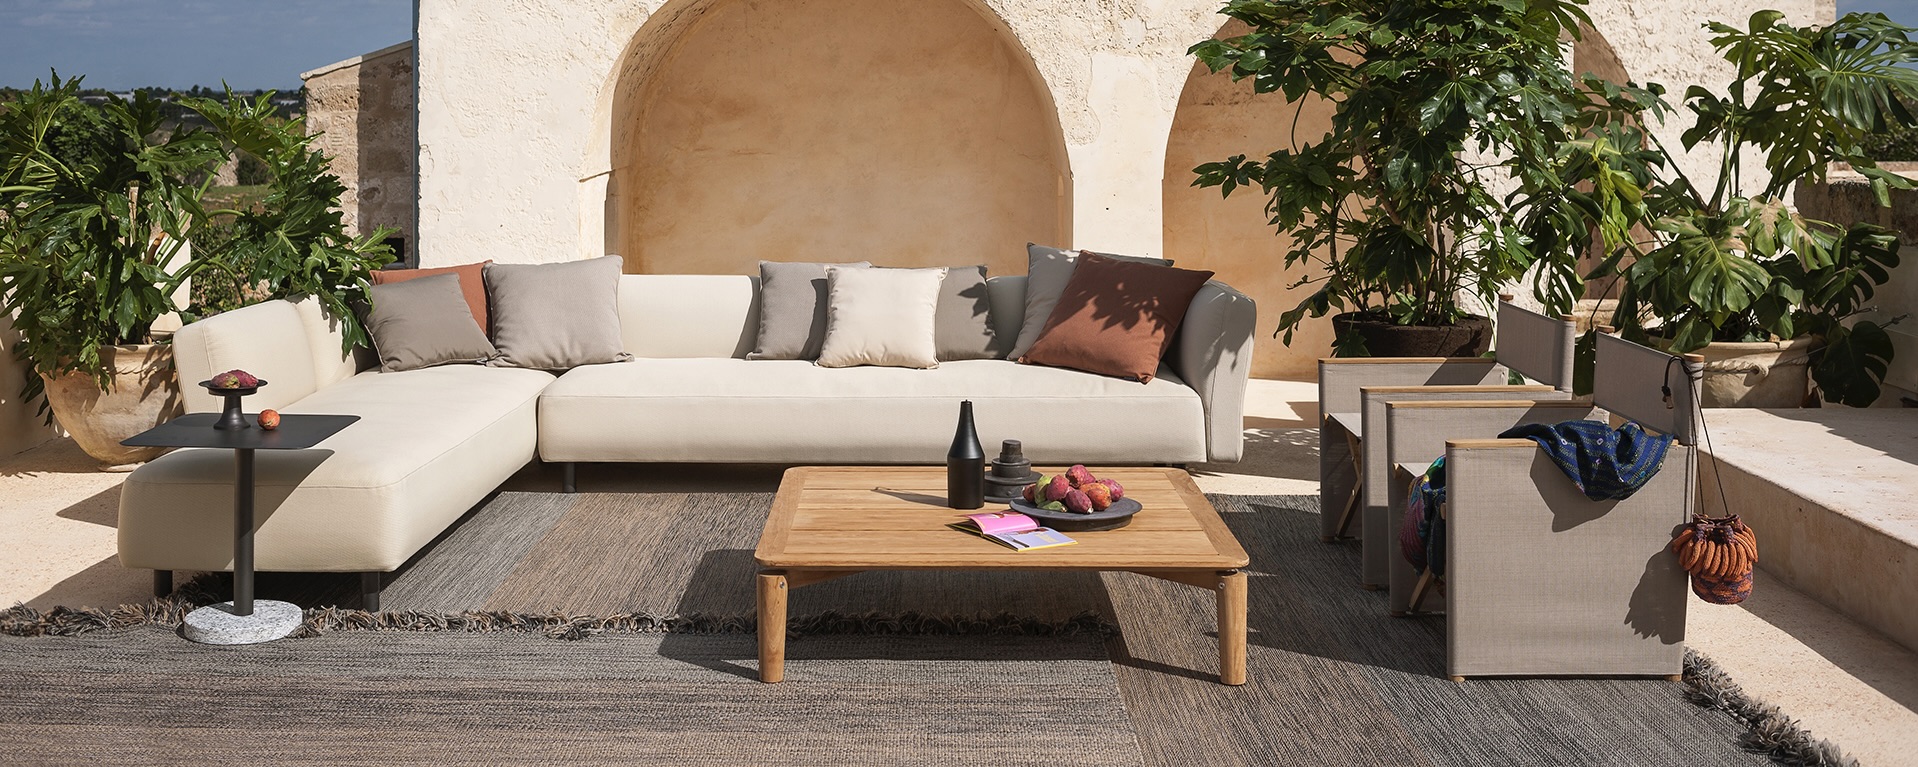 roda mamba outdoor sofa dunas living